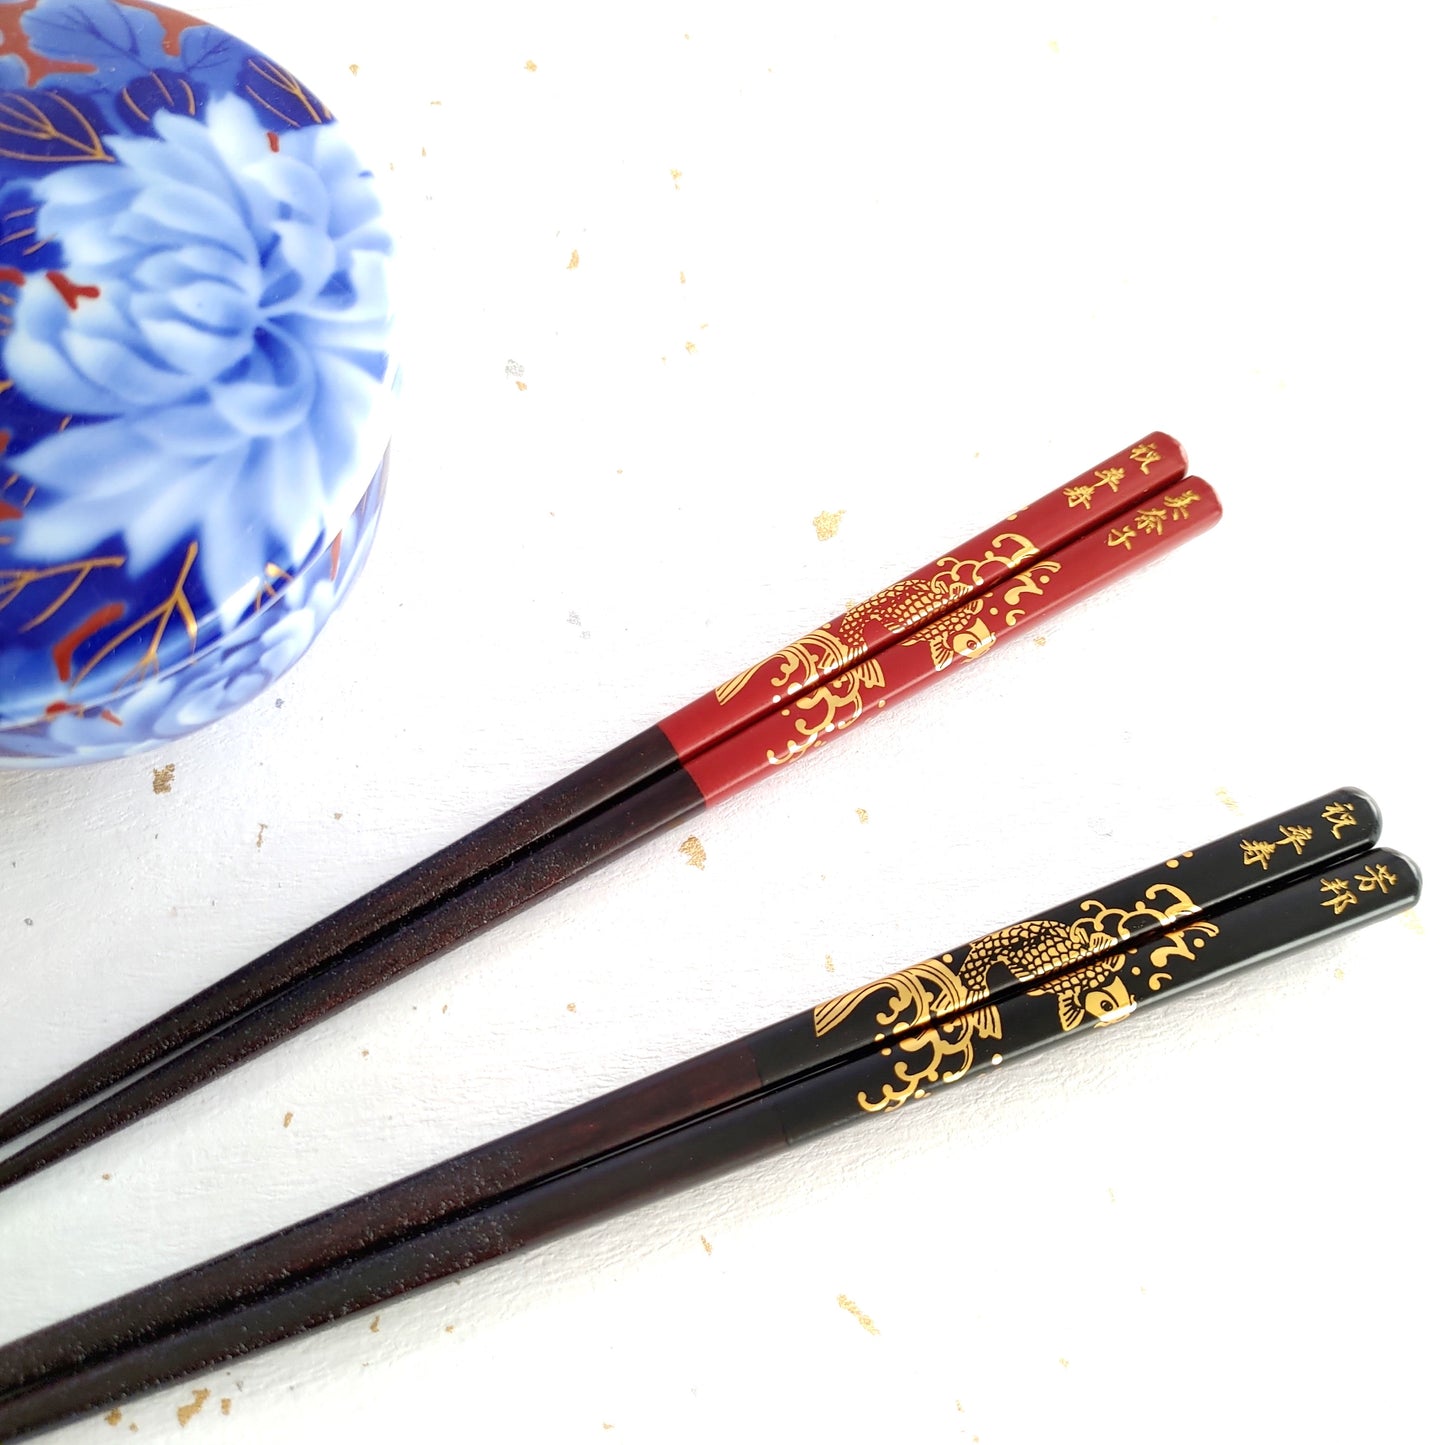 Golden legendary carp Japanese chopsticks black red - DOUBLE PAIR WITH ENGRAVED WOODEN BOX SET